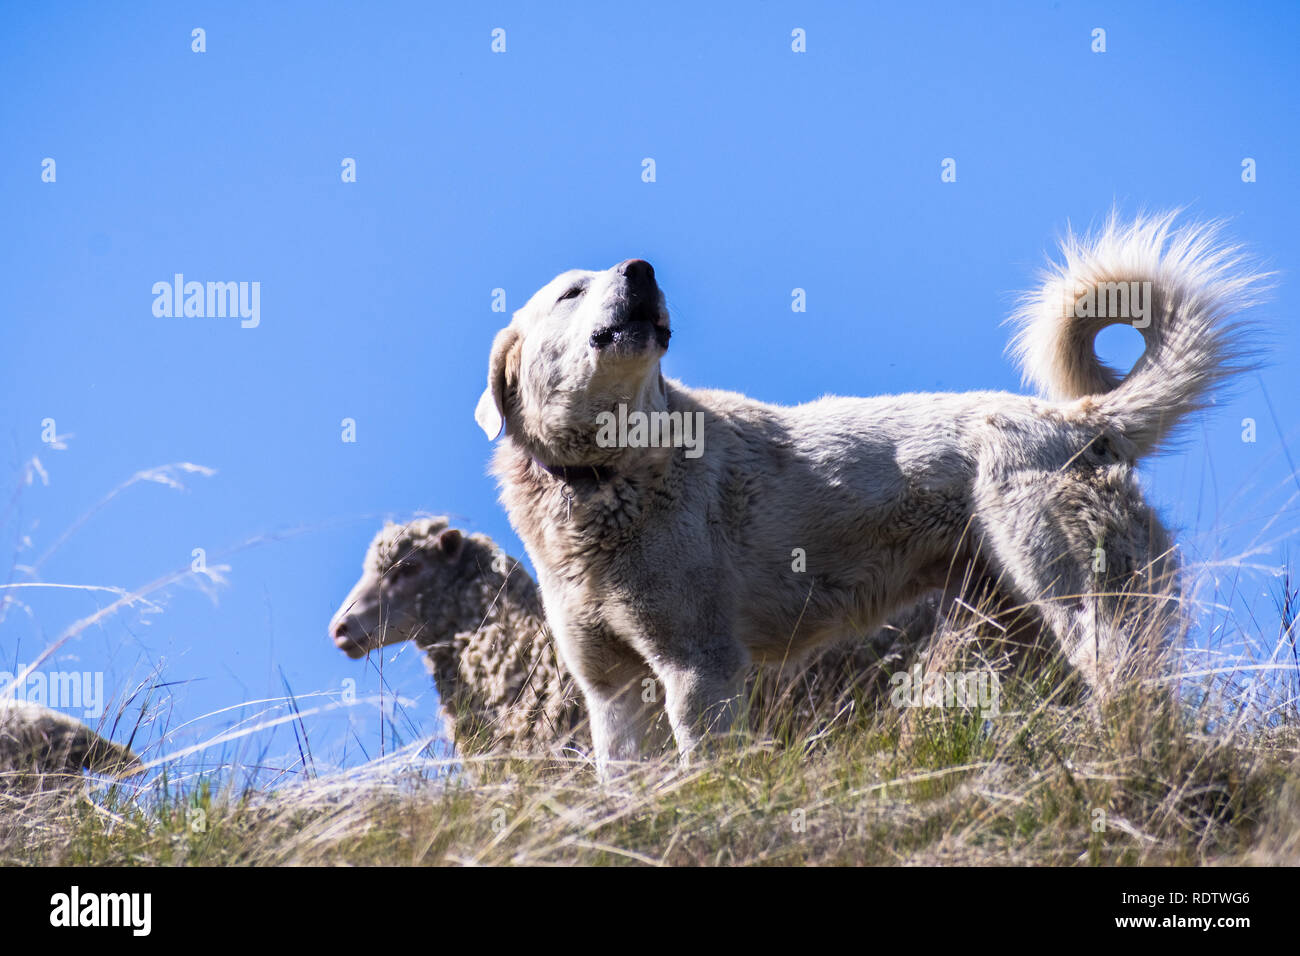 Akbash dog, a breed of shepherd dog original from Turkey, guarding a sheep herd in San Francisco bay area, California Stock Photo